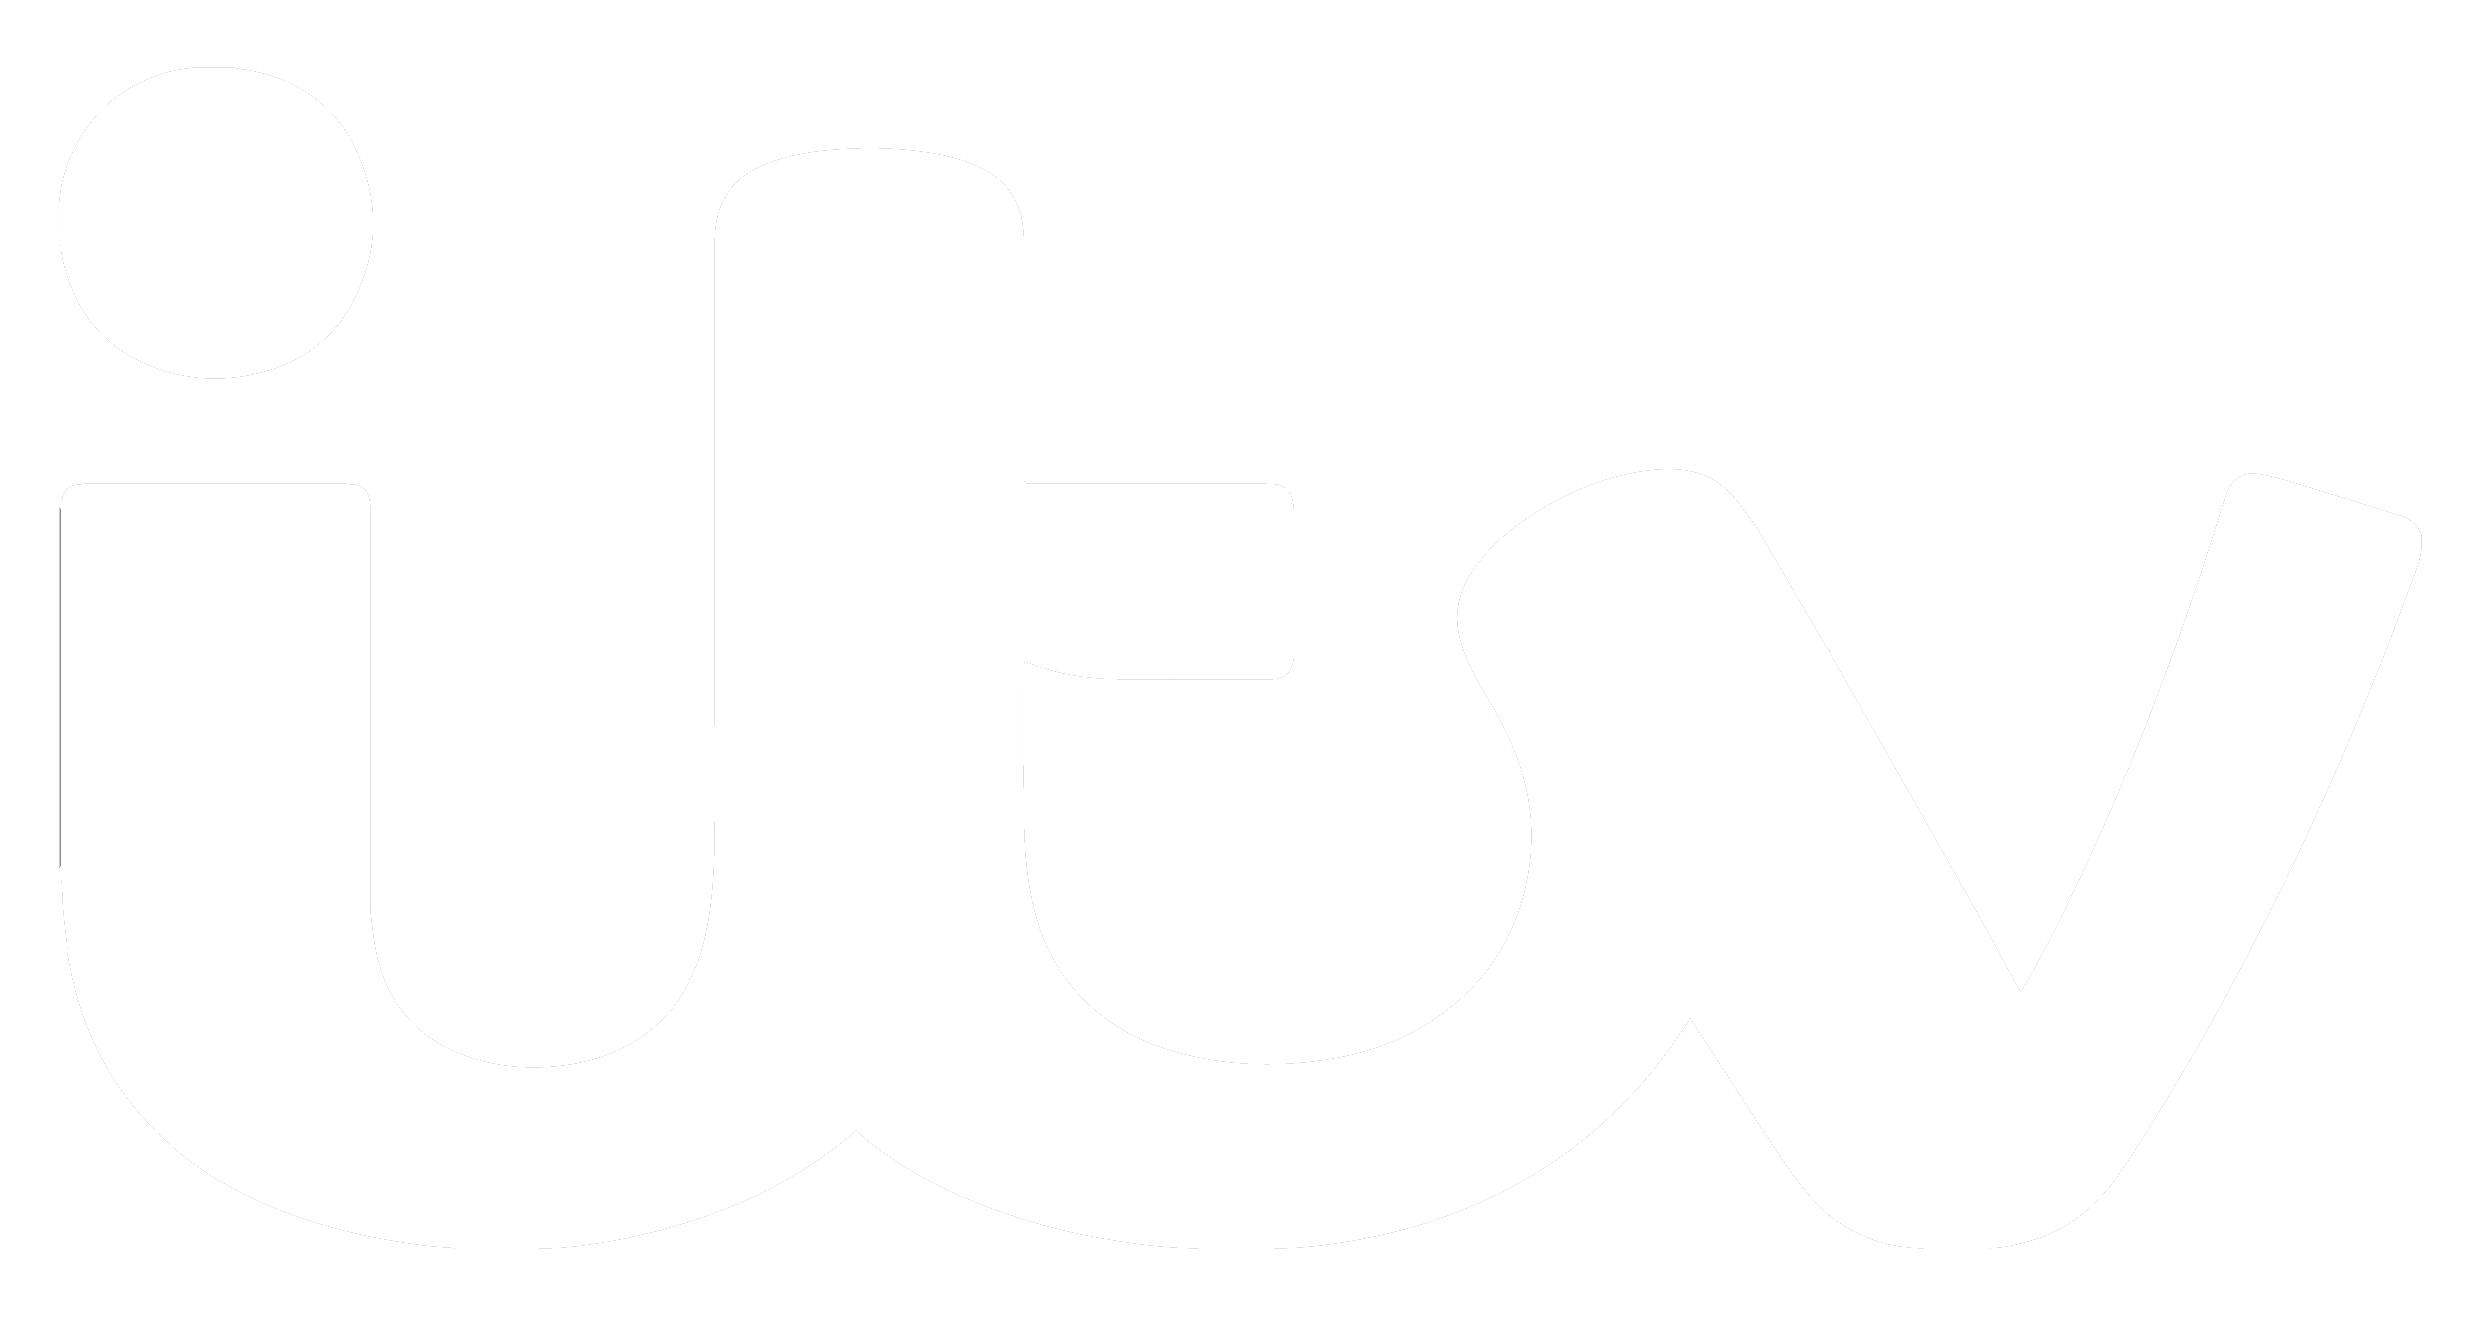 ITV